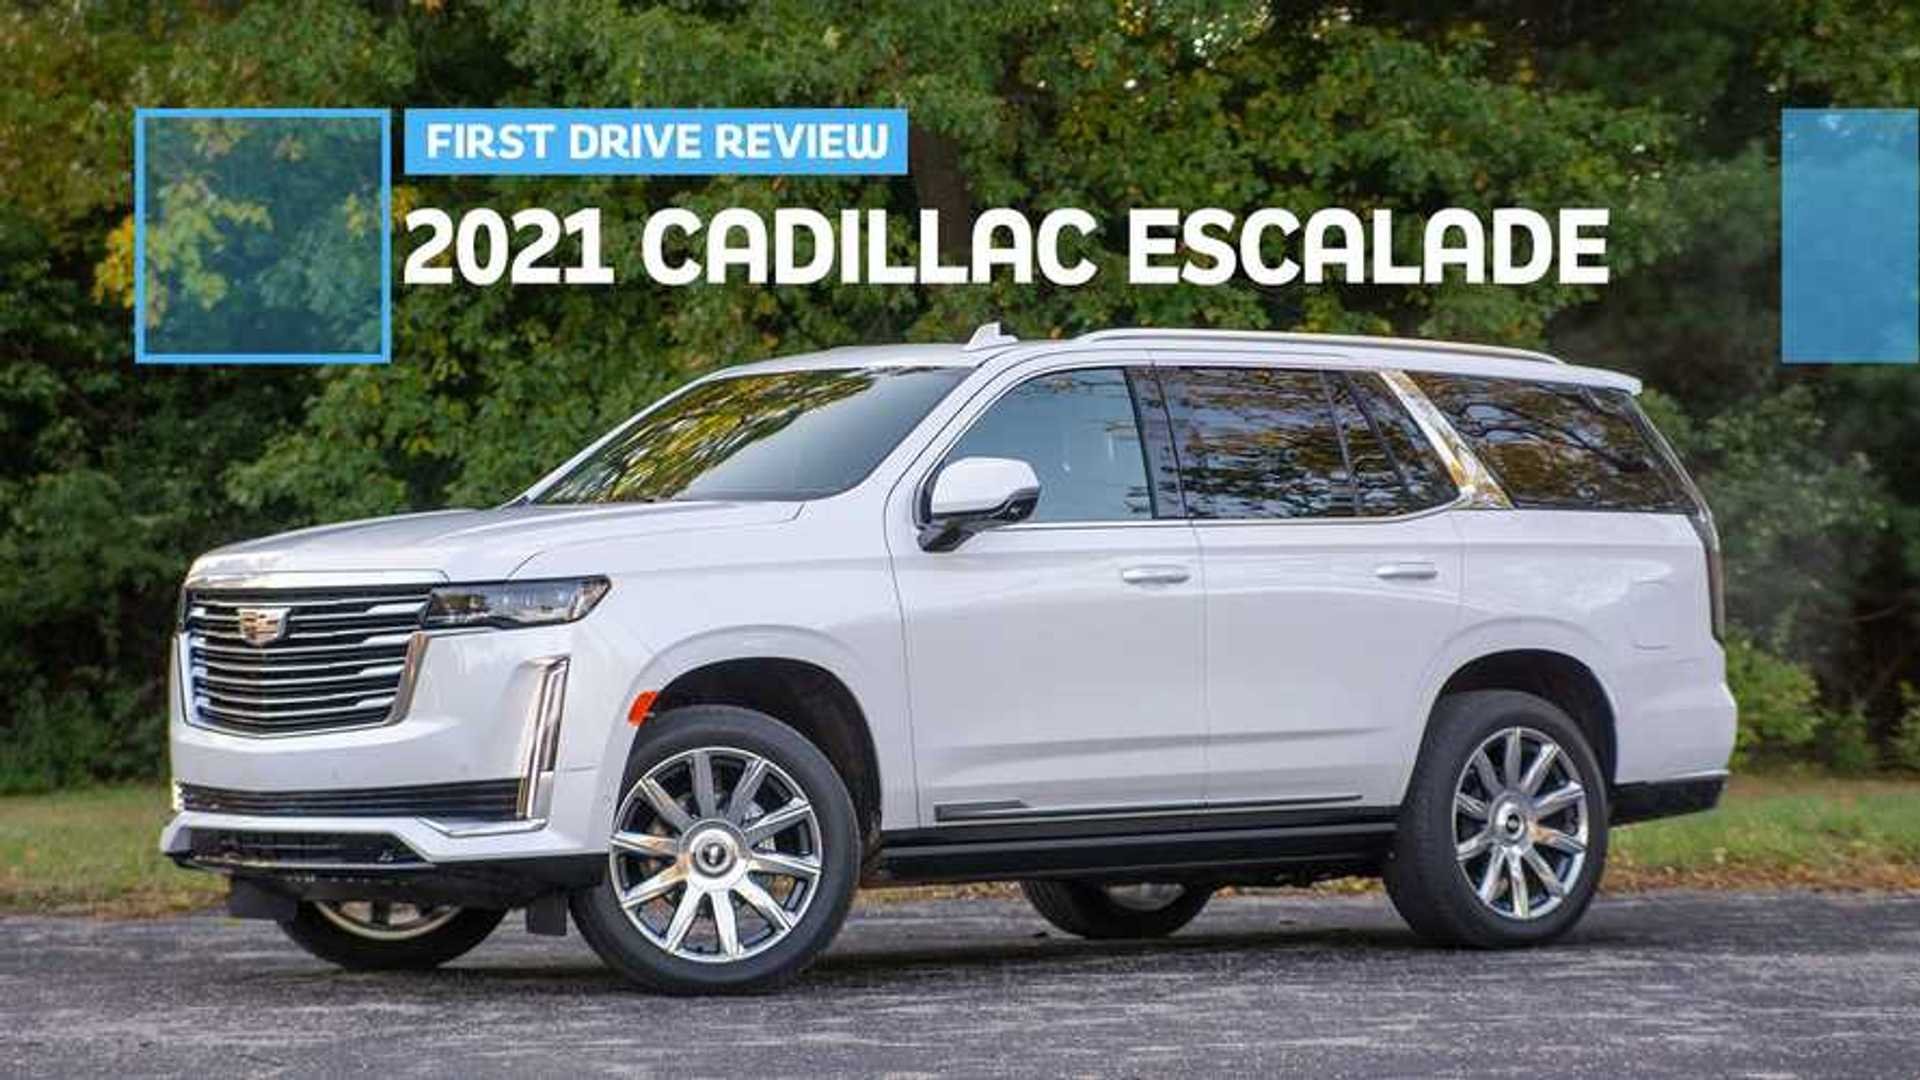 2021 Cadillac Escalade First Drive Review: The Cadillac Of Cadillacs